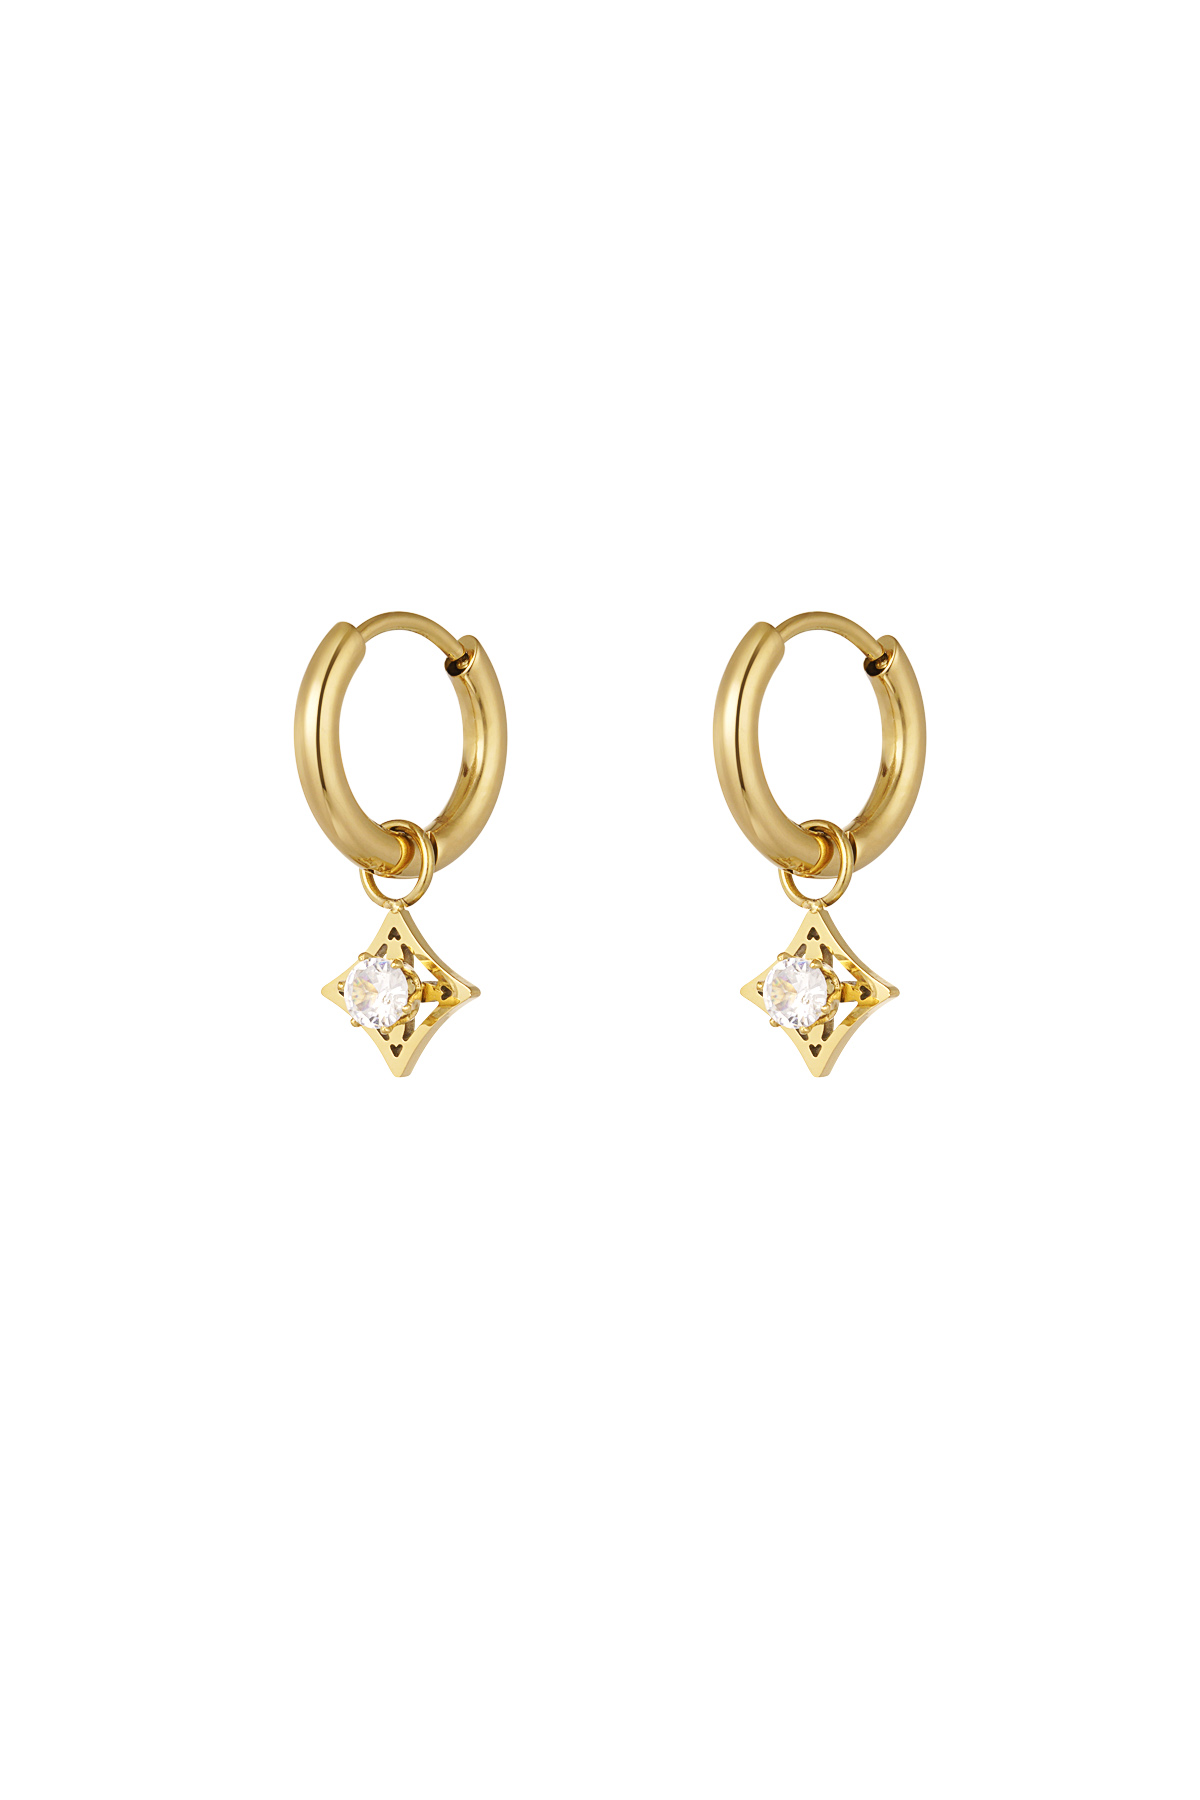 Earrings minimalist diamond with stone - gold 